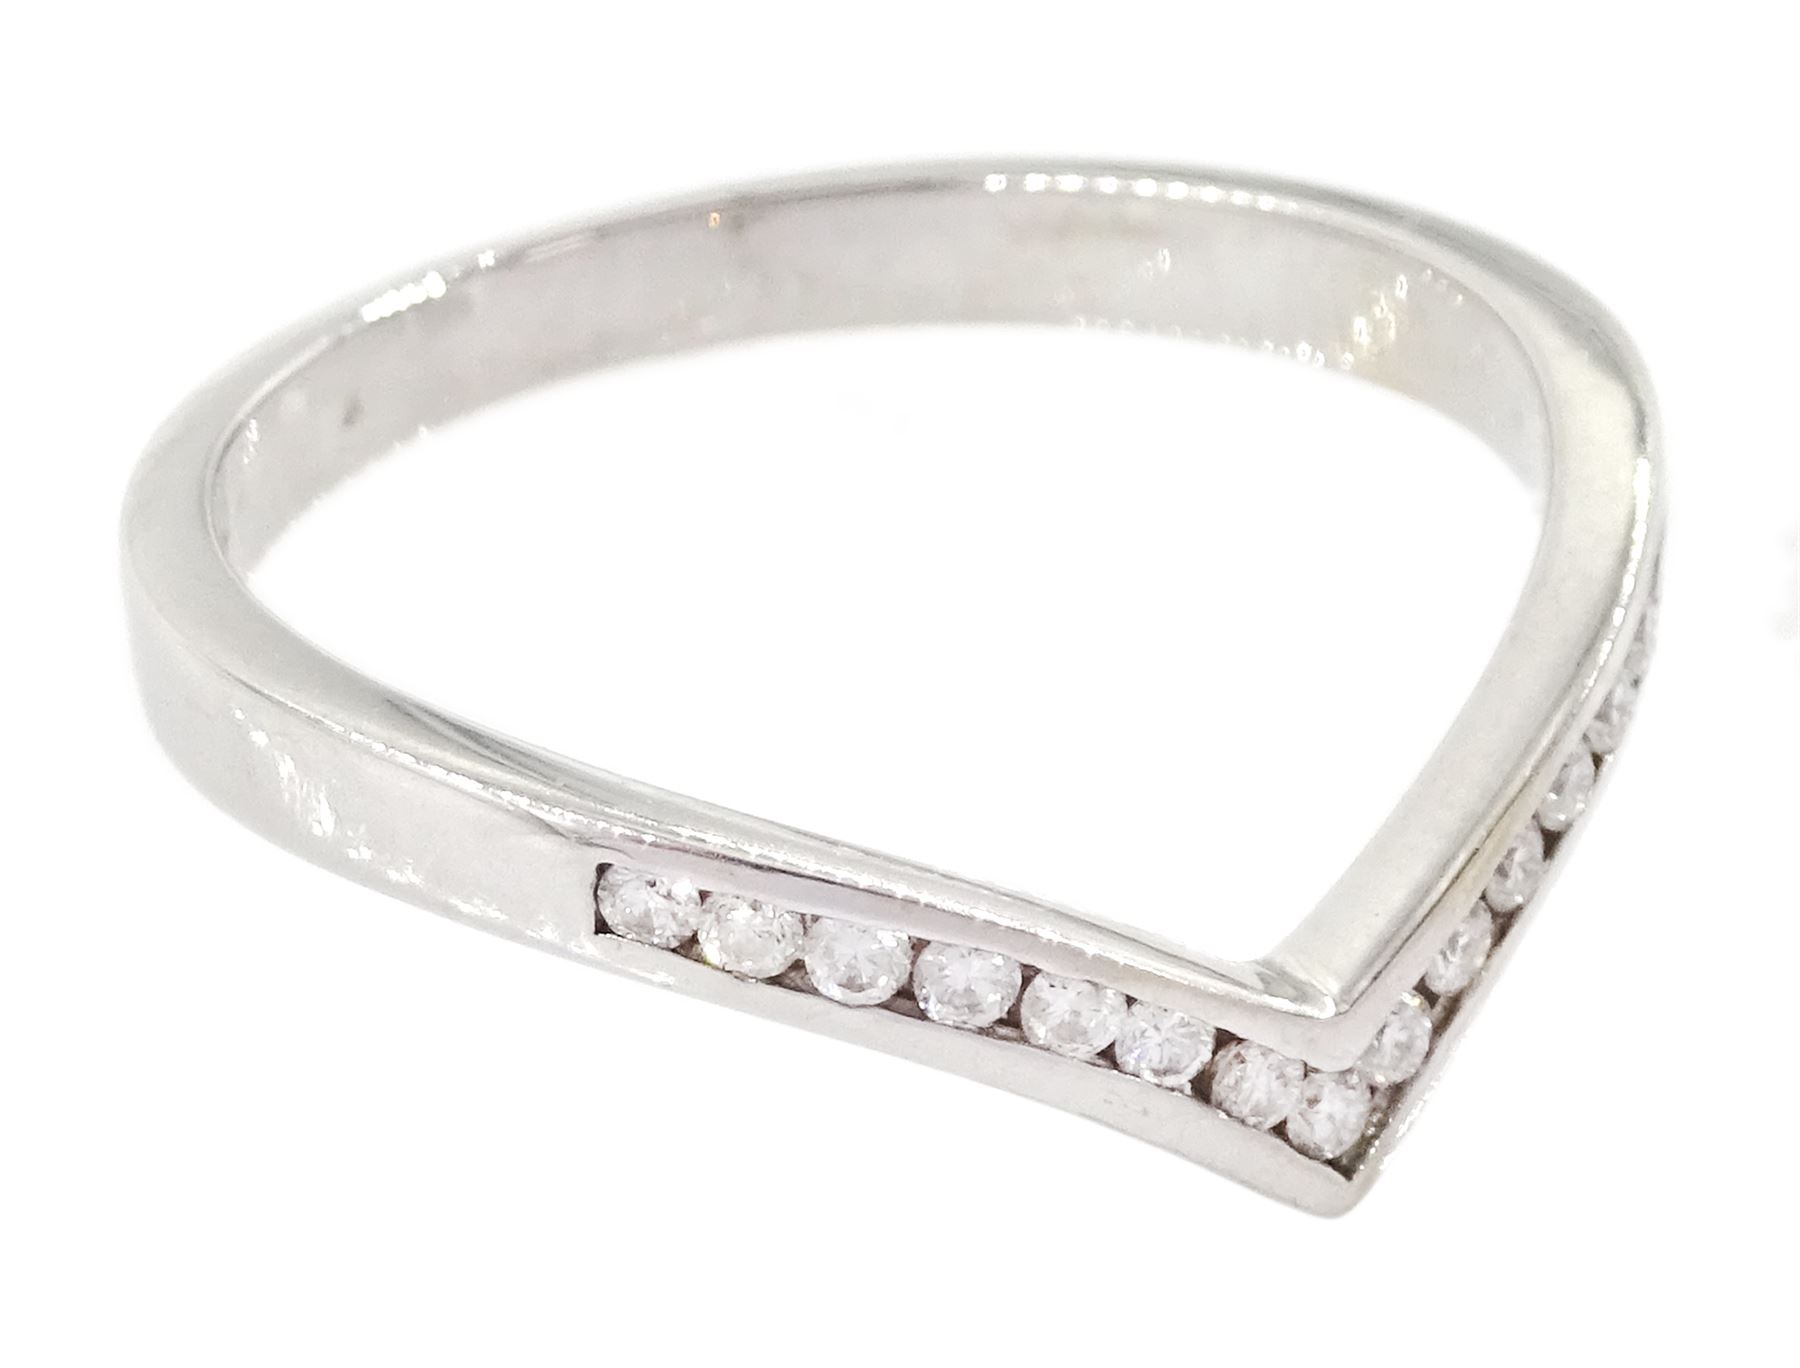 18ct white gold channel set round brilliant cut diamond wishbone ring - Image 3 of 4